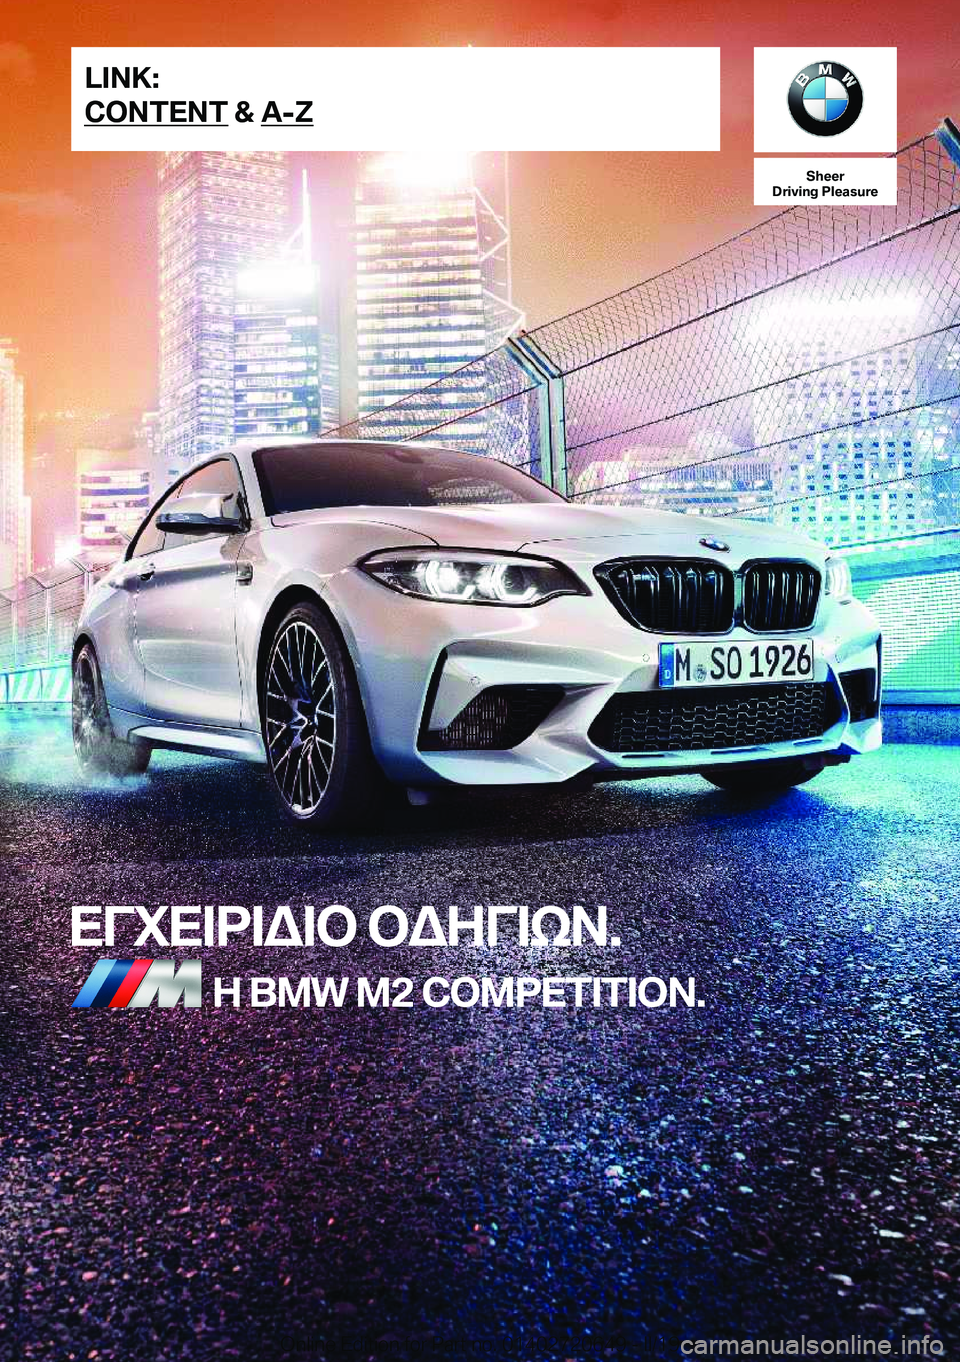 BMW M2 2020  ΟΔΗΓΌΣ ΧΡΉΣΗΣ (in Greek) �S�h�e�e�r
�D�r�i�v�i�n�g��P�l�e�a�s�u�r�e
XViX=d=W=b�bWZV=kA�.Z��B�M�W��M�2��C�O�M�P�E�T�I�T�I�O�N�.�L�I�N�K�:
�C�O�N�T�E�N�T��&��A�-�Z�O�n�l�i�n�e��E�d�i�t�i�o�n��f�o�r��